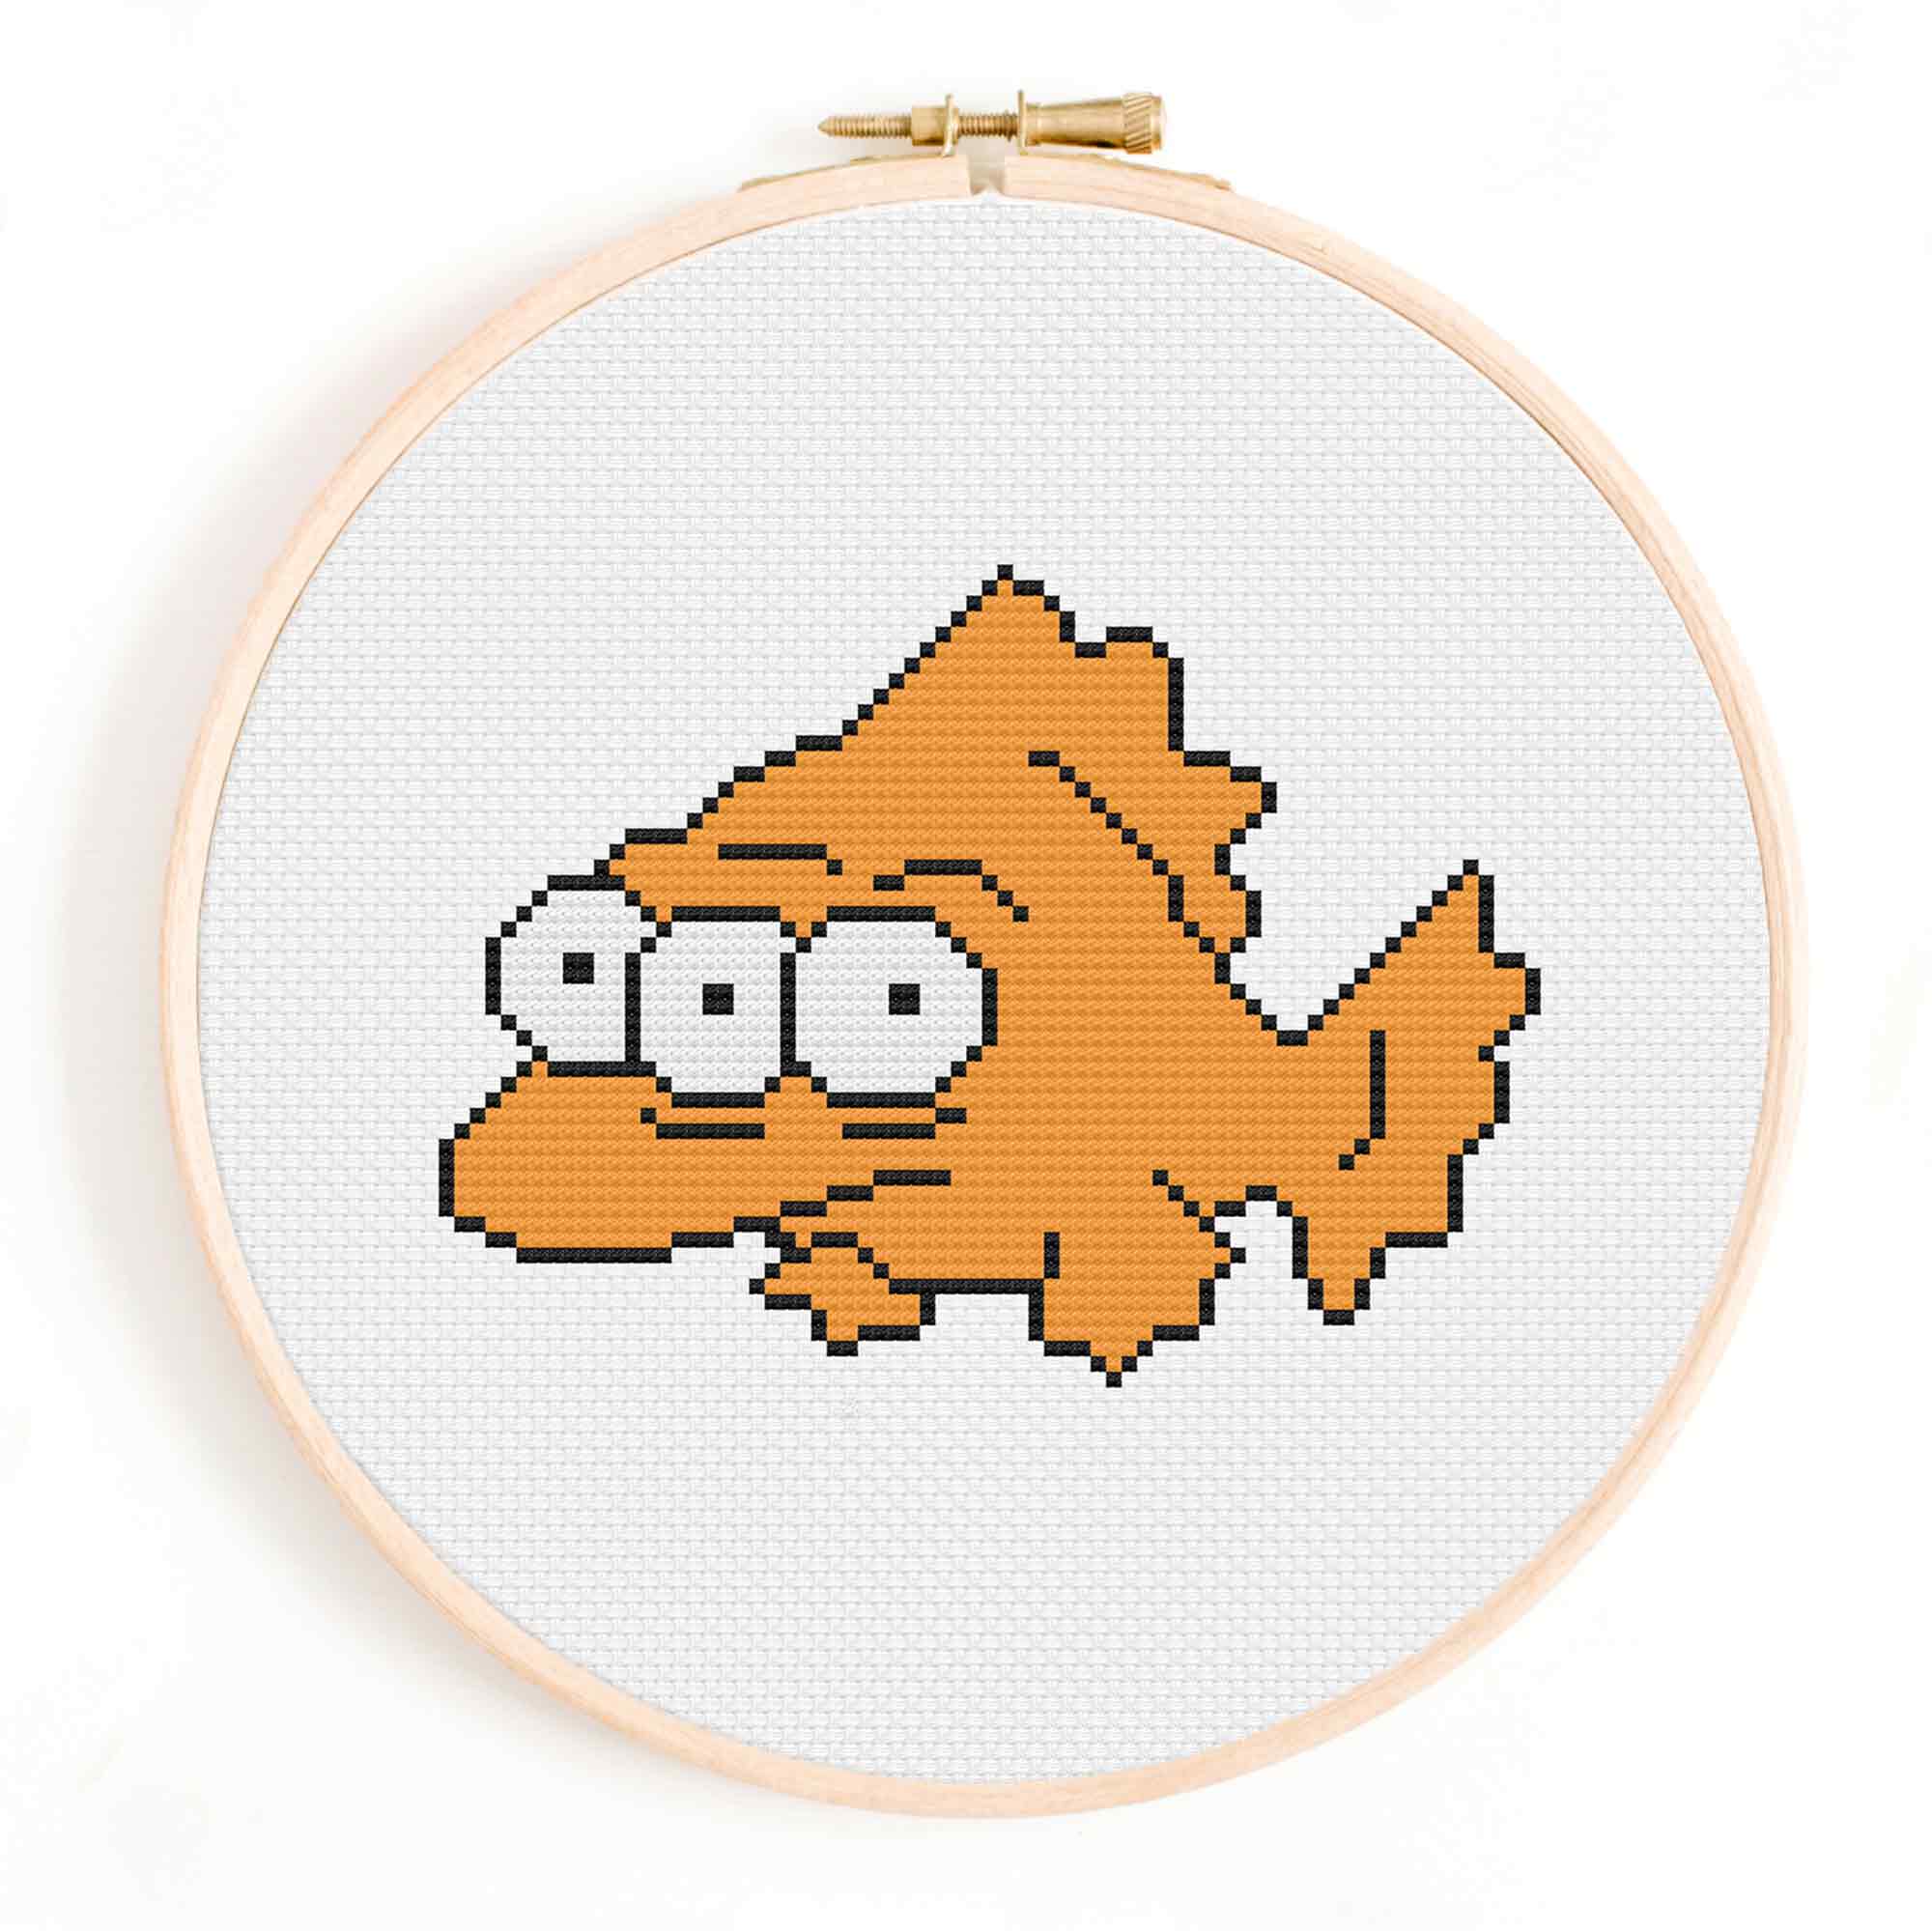 'Blinky' The Simpsons Three-Eyed Fish Cross Stitch Pattern